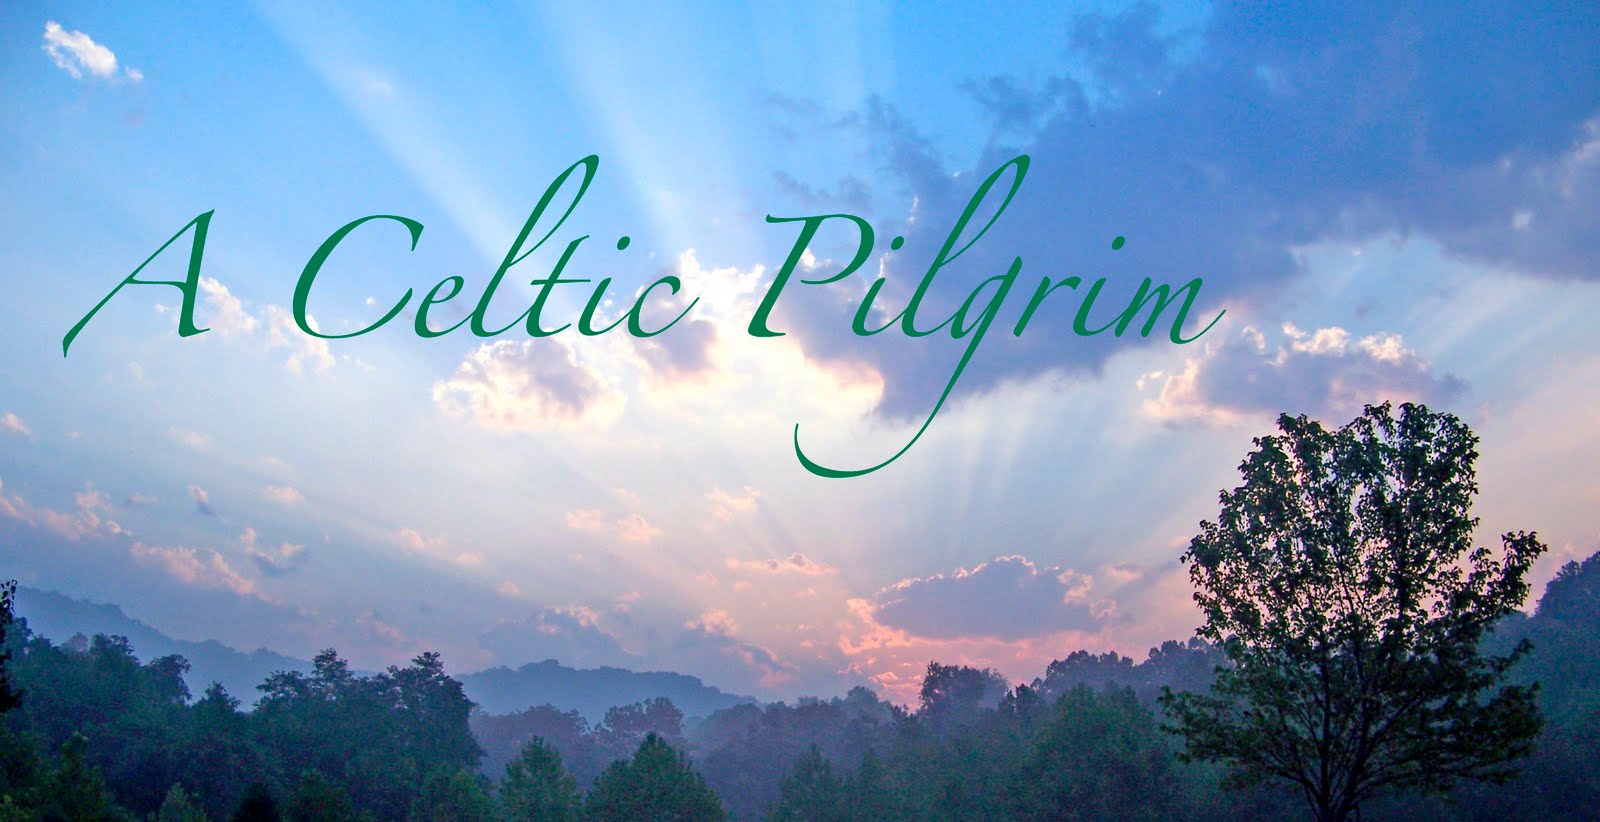 A Celtic Pilgrim